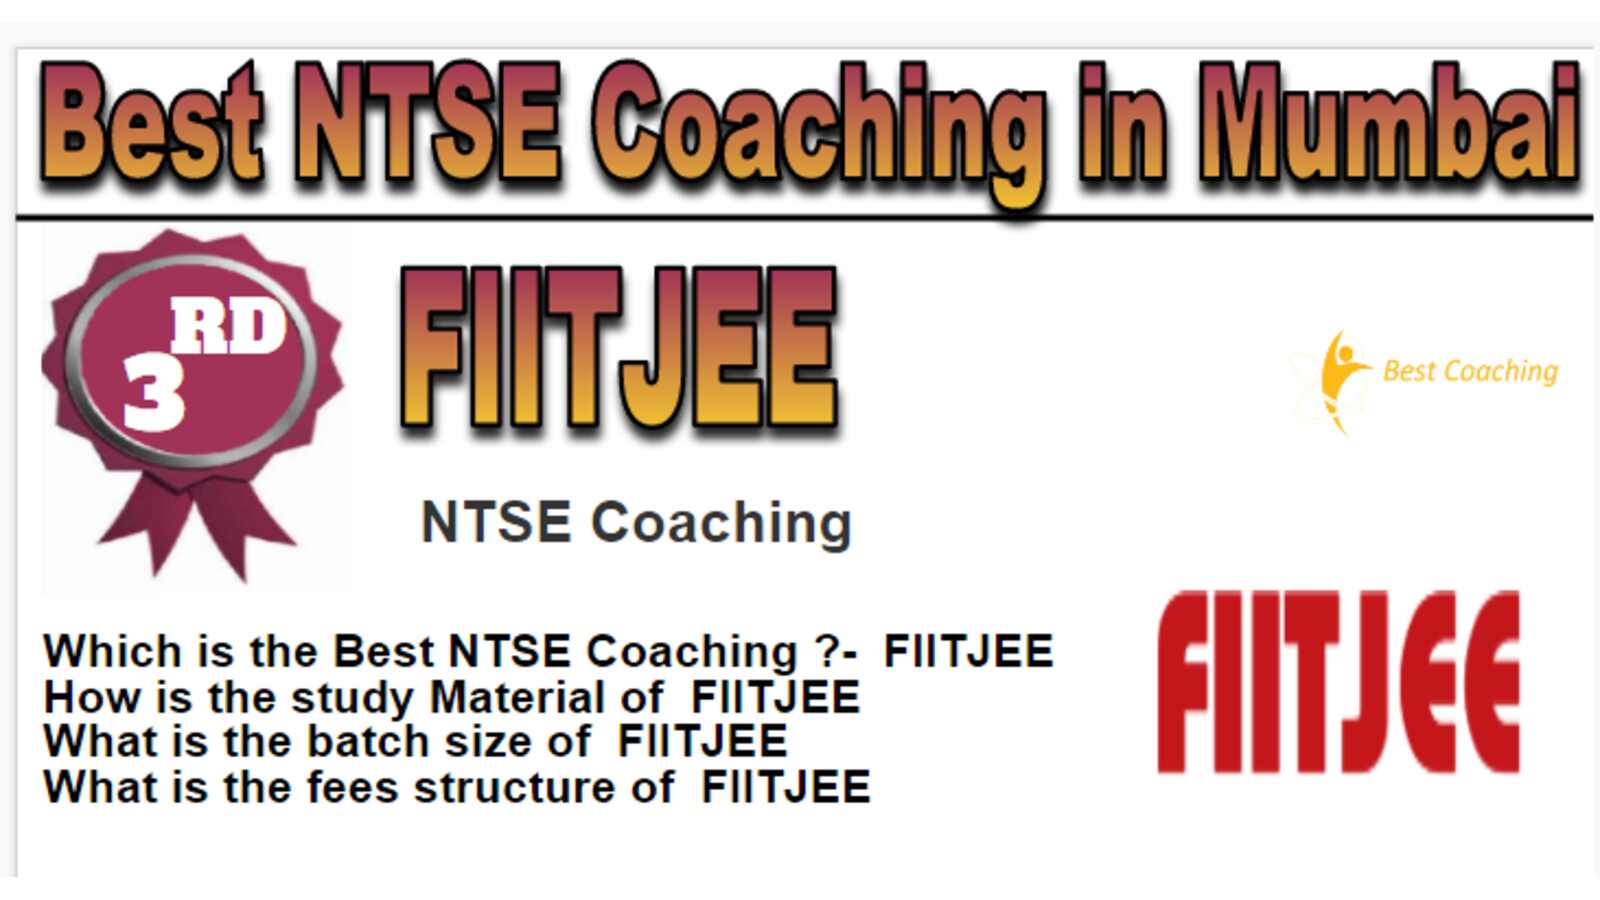 Rank 3 Best NTSE Coaching in Mumbai